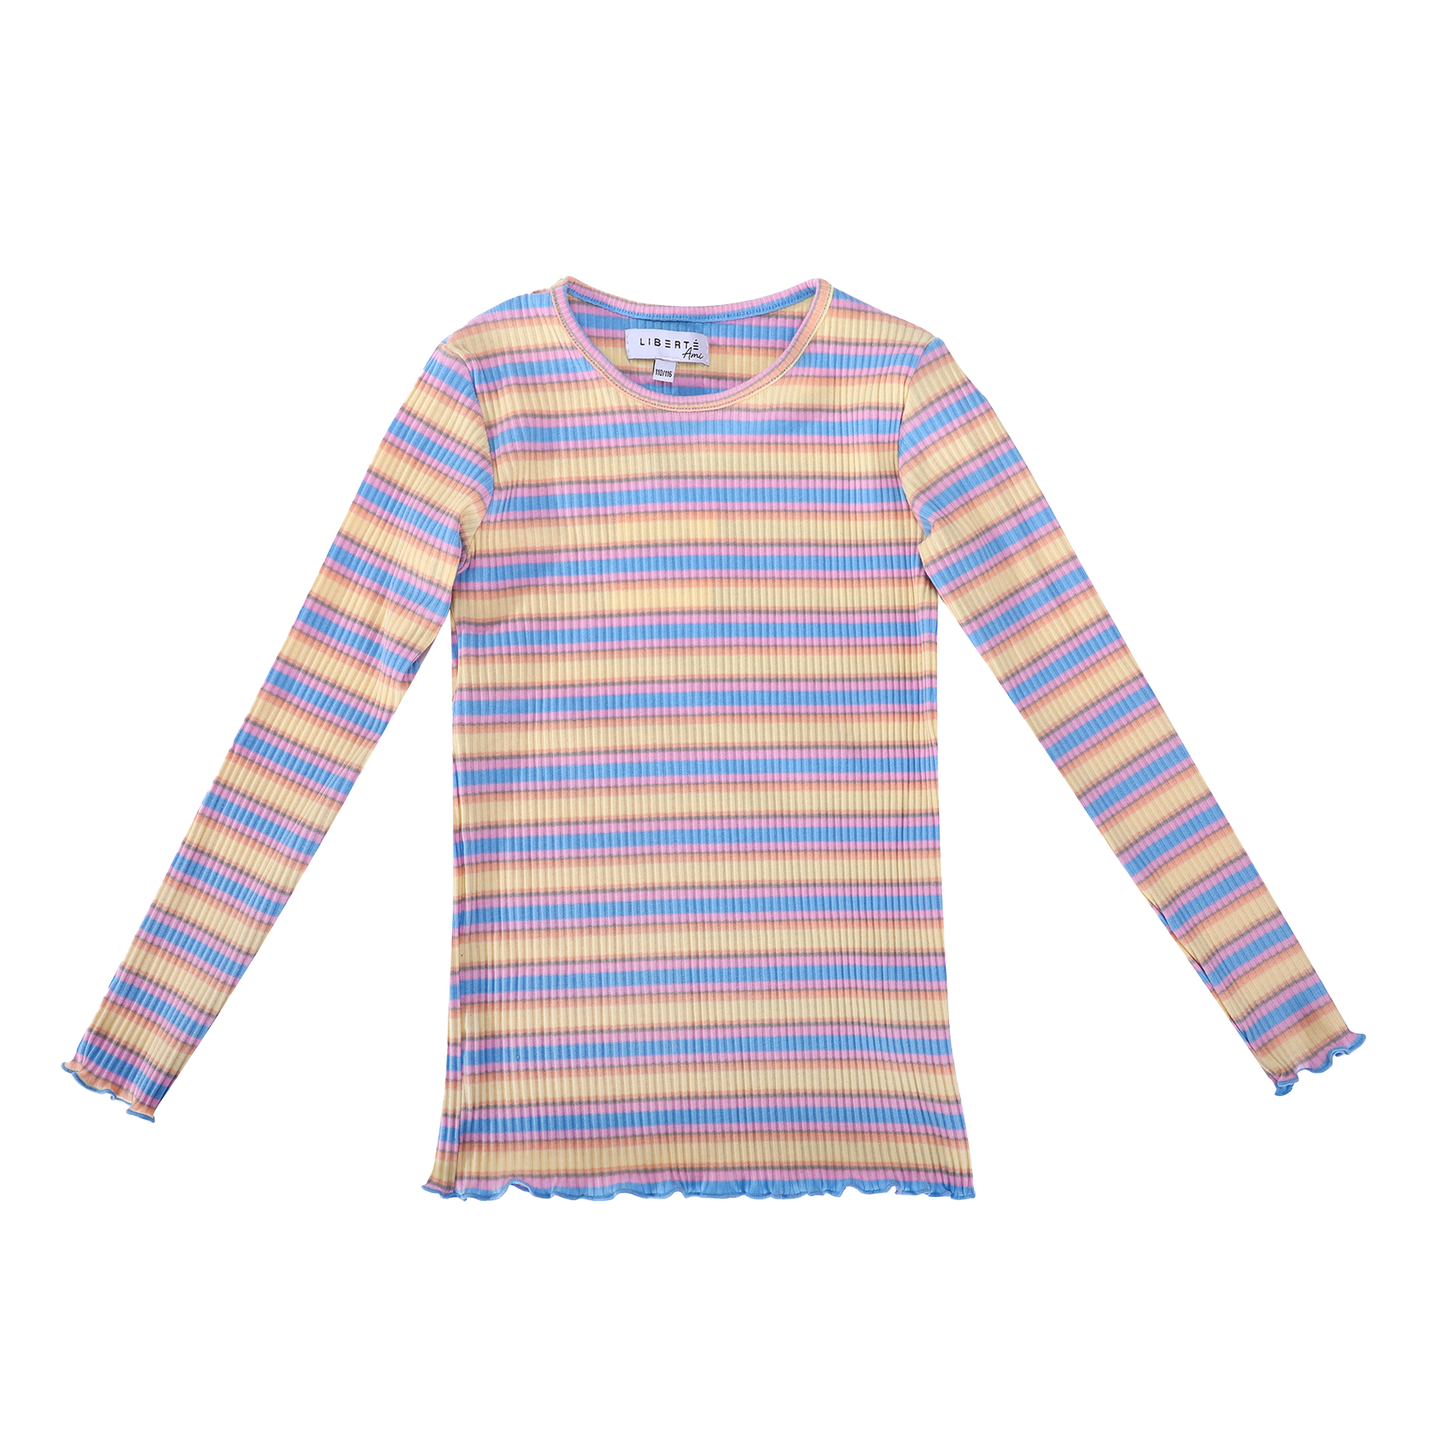 Natalia kids blouse - Yellow/Rose/Blue Stripe